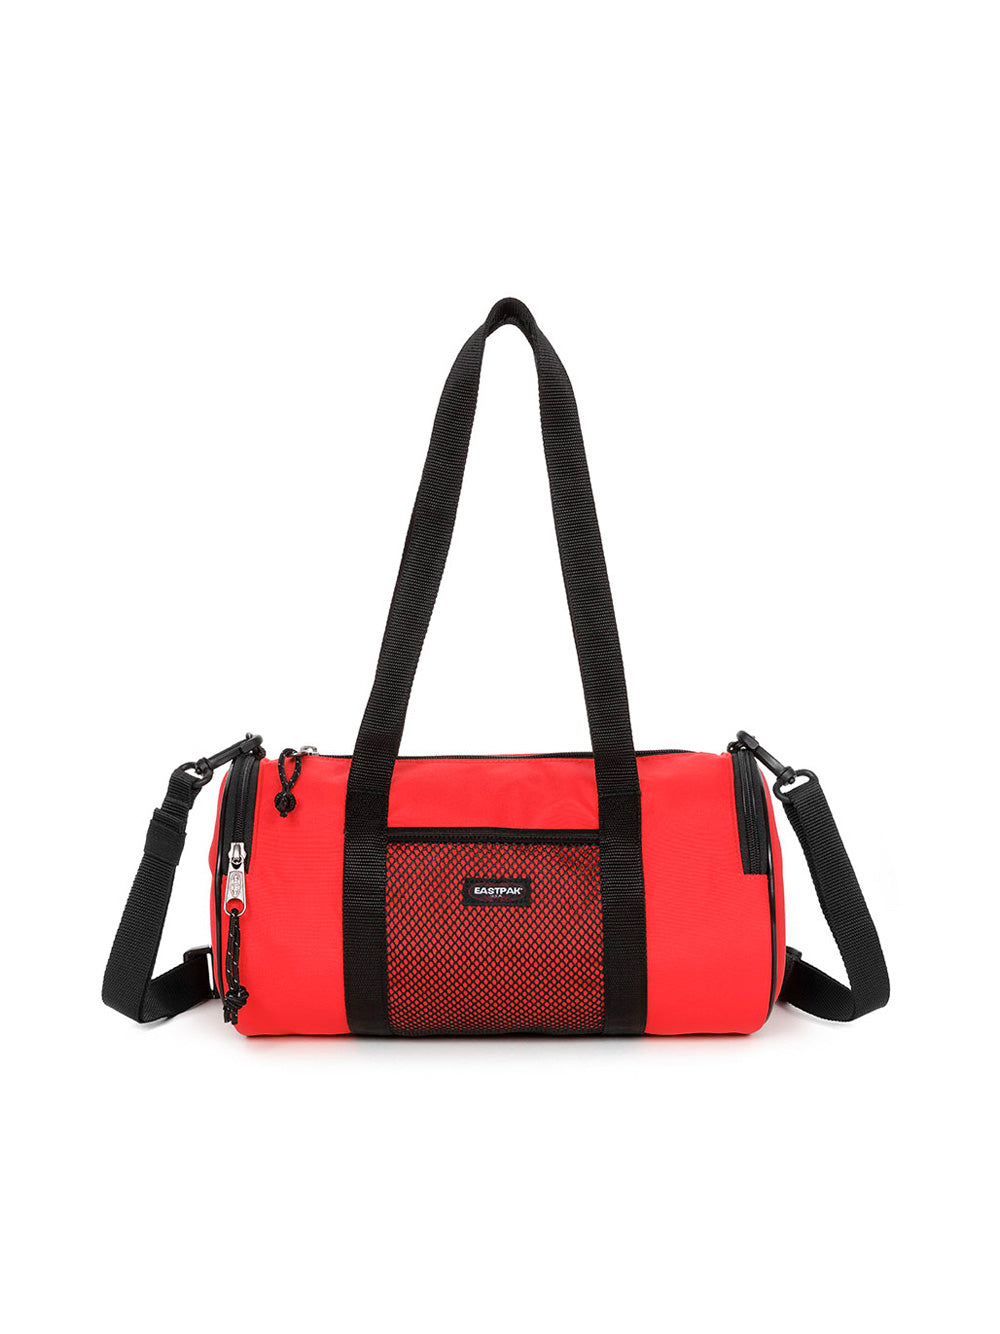 Medium Red Duffle Bag